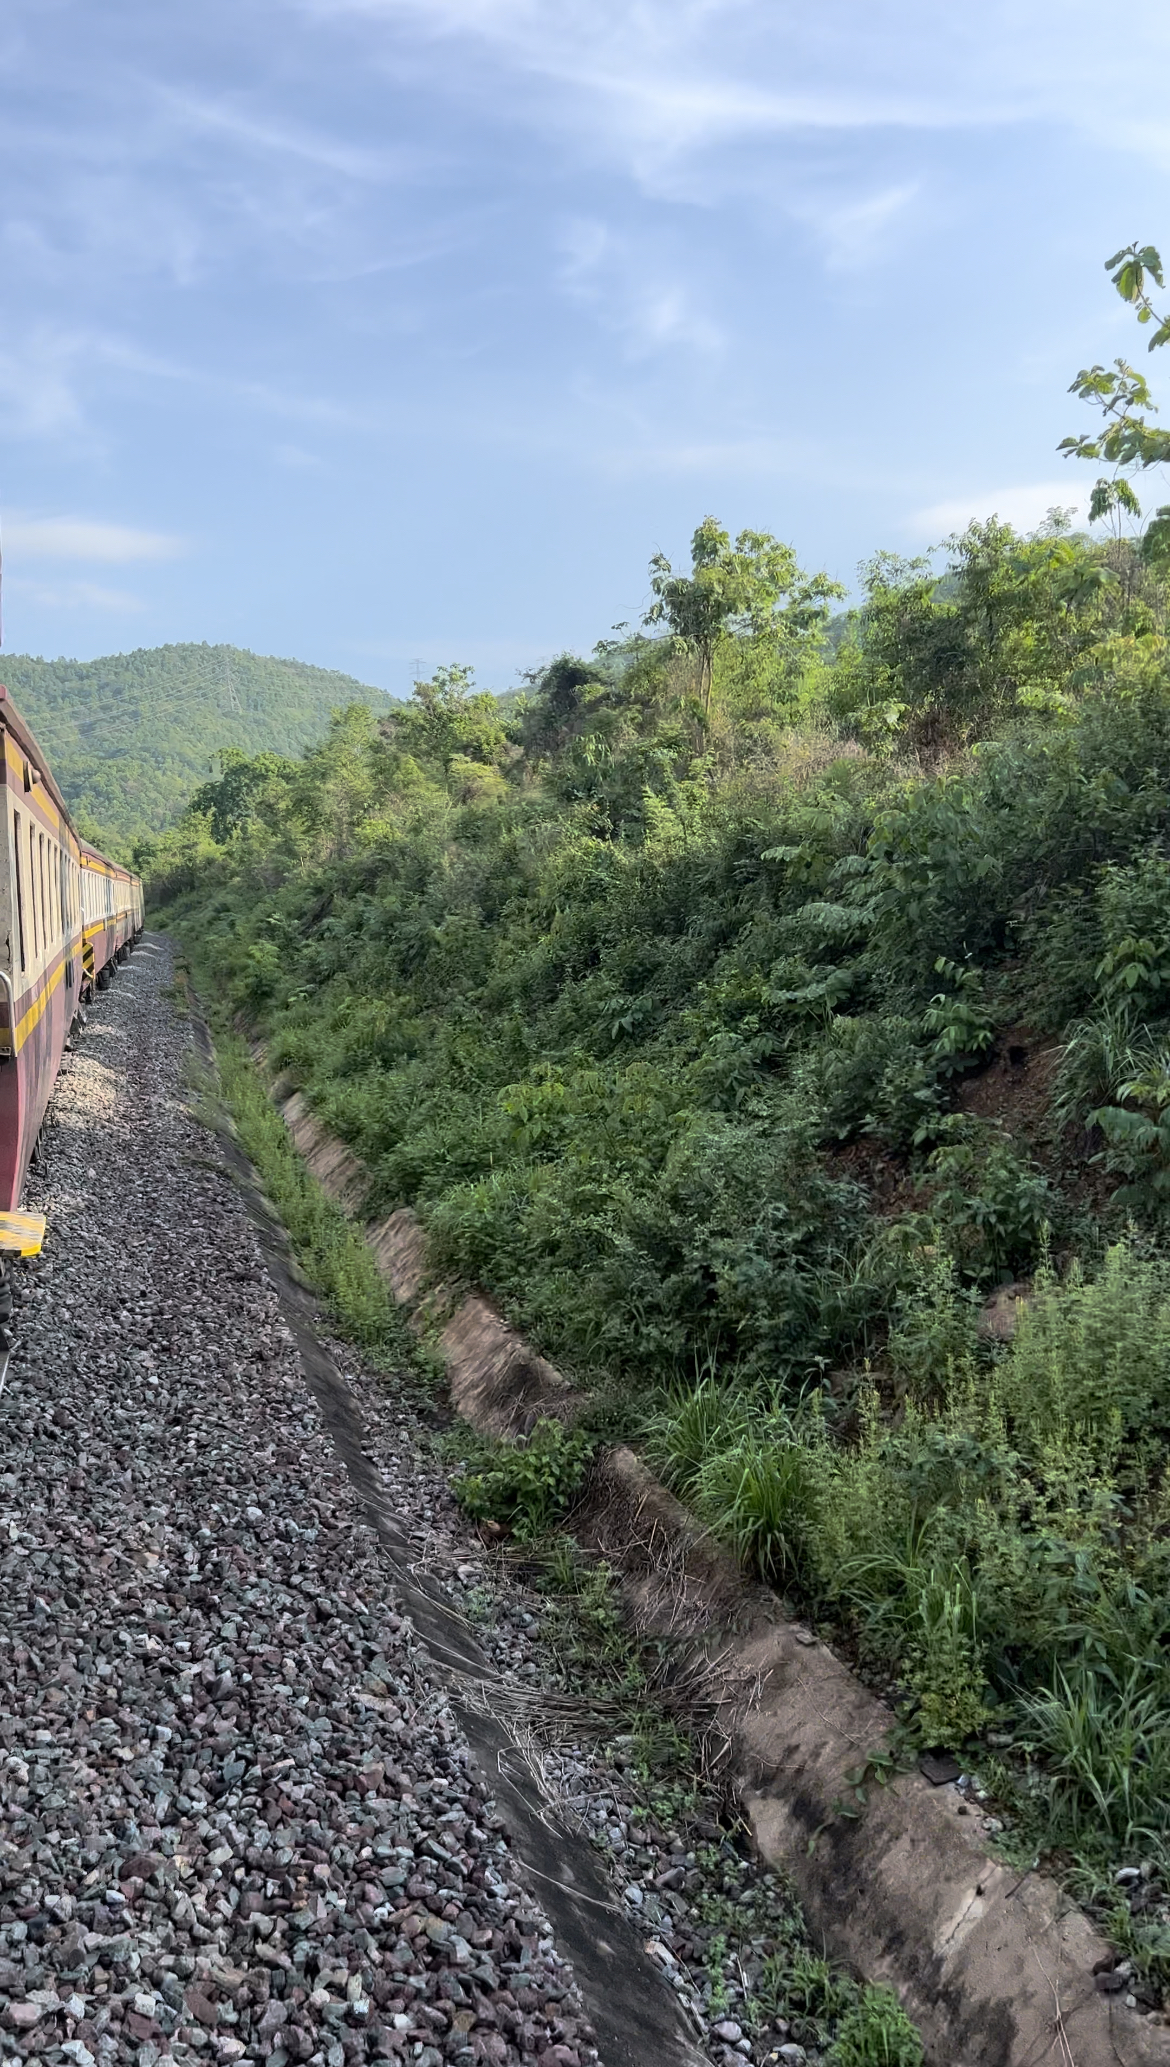 Thailand's Train Adventures: Bangkok to Chiang Mai Adventure